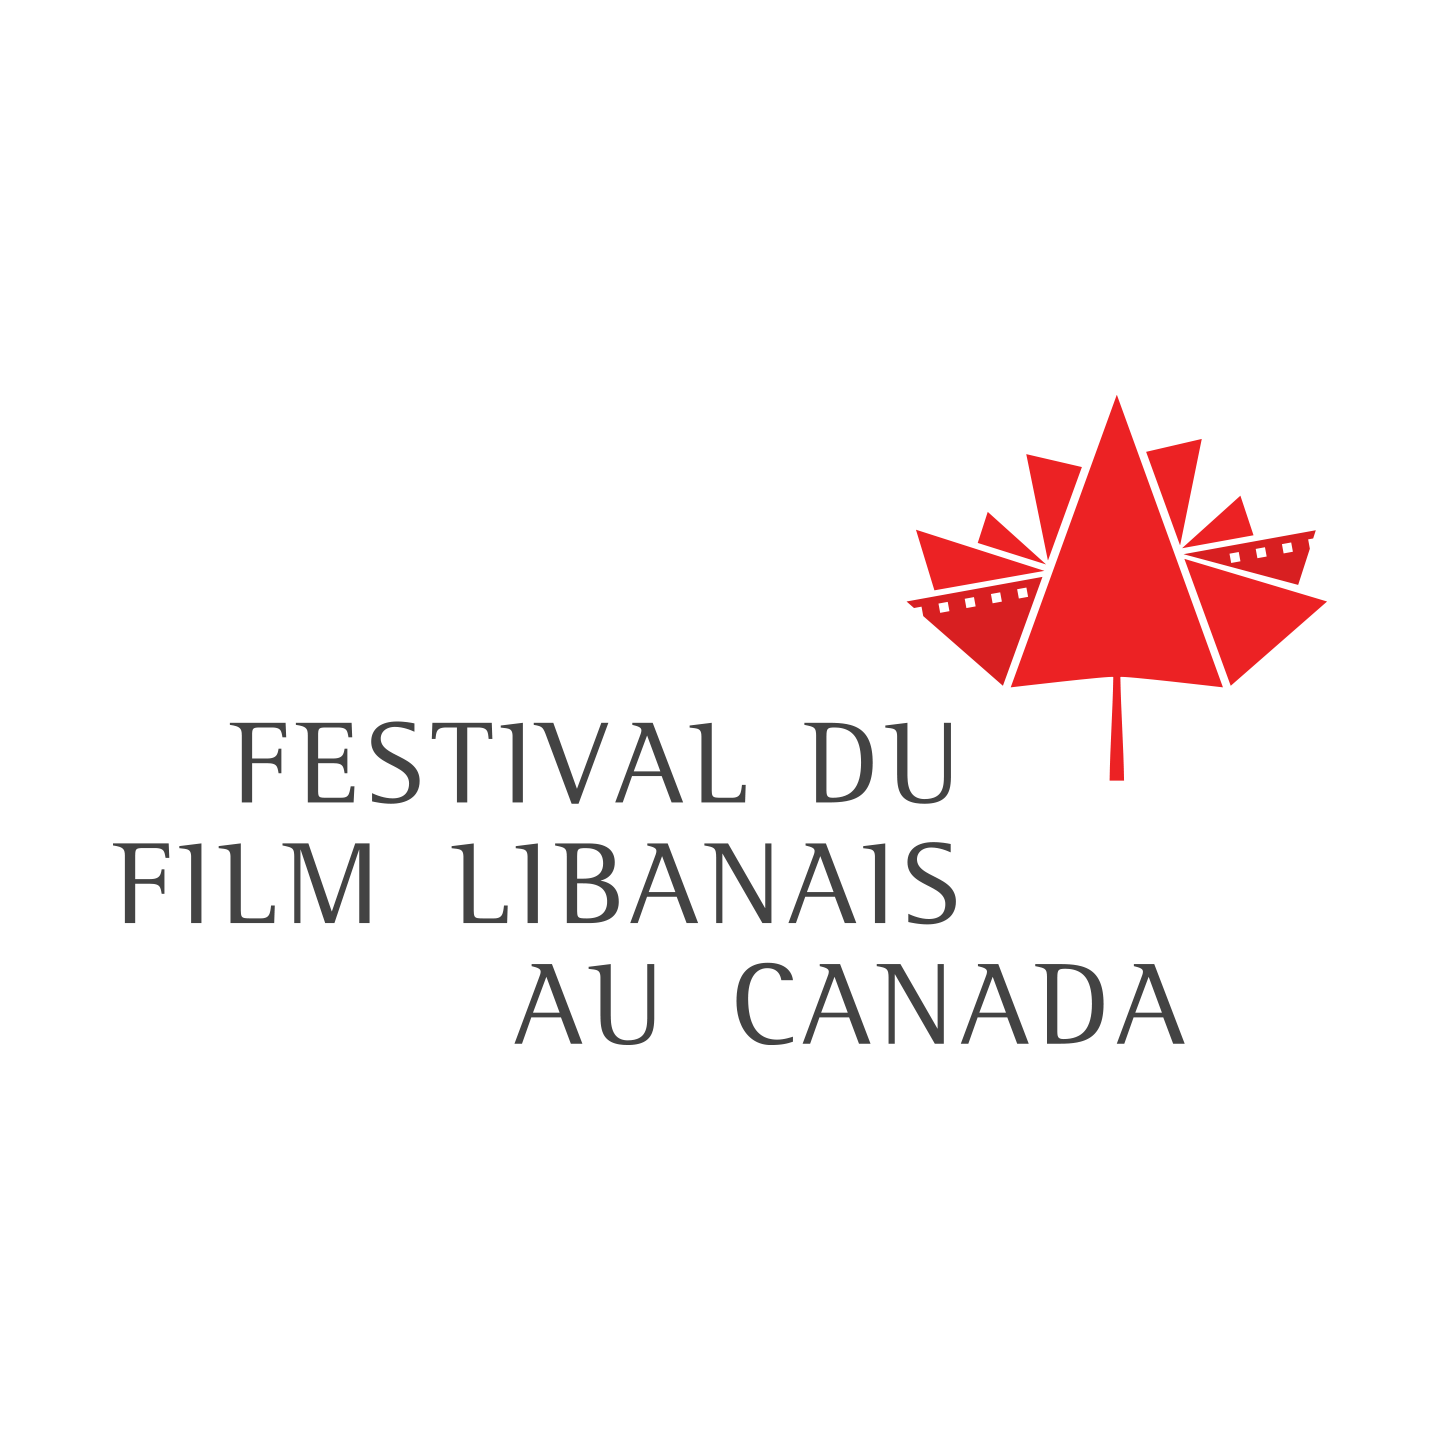 Festival du film libanais au Canada